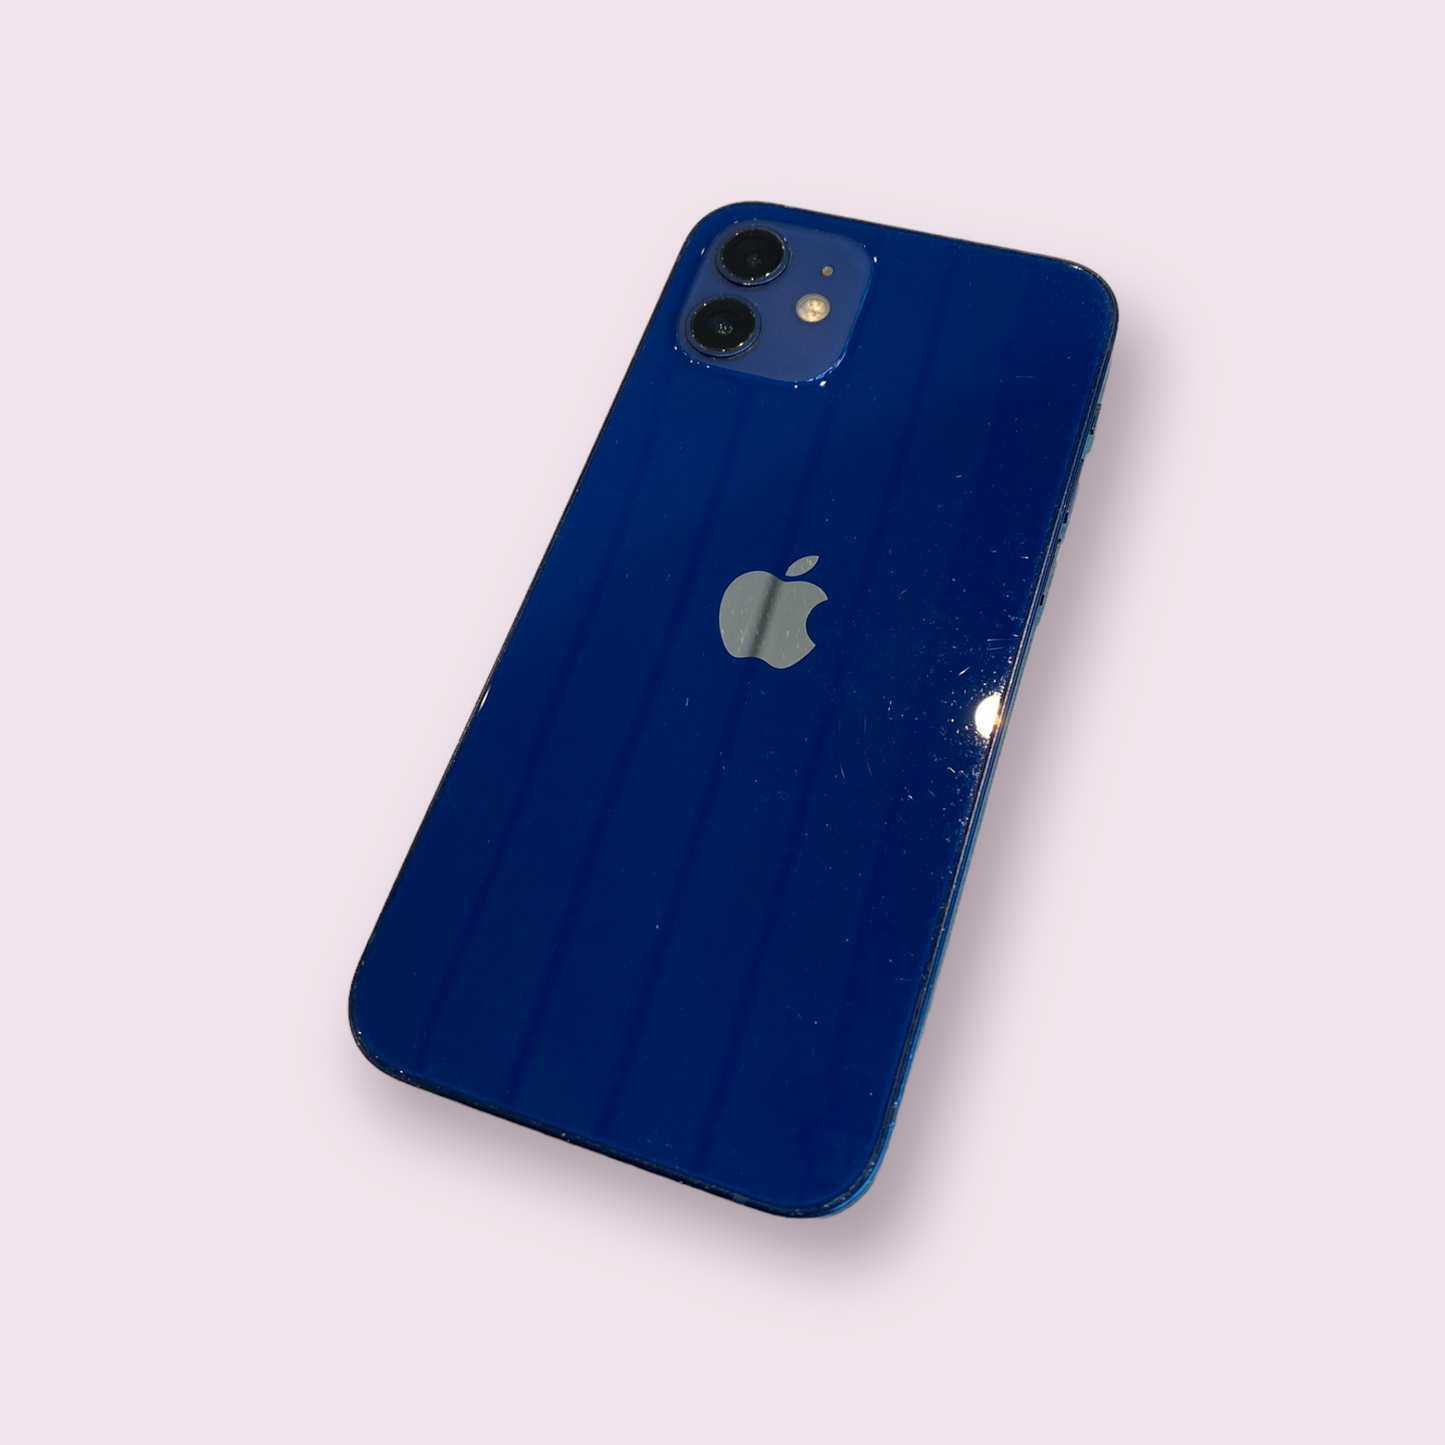 Apple iPhone 12 64GB Blue - Unlocked - Grade B